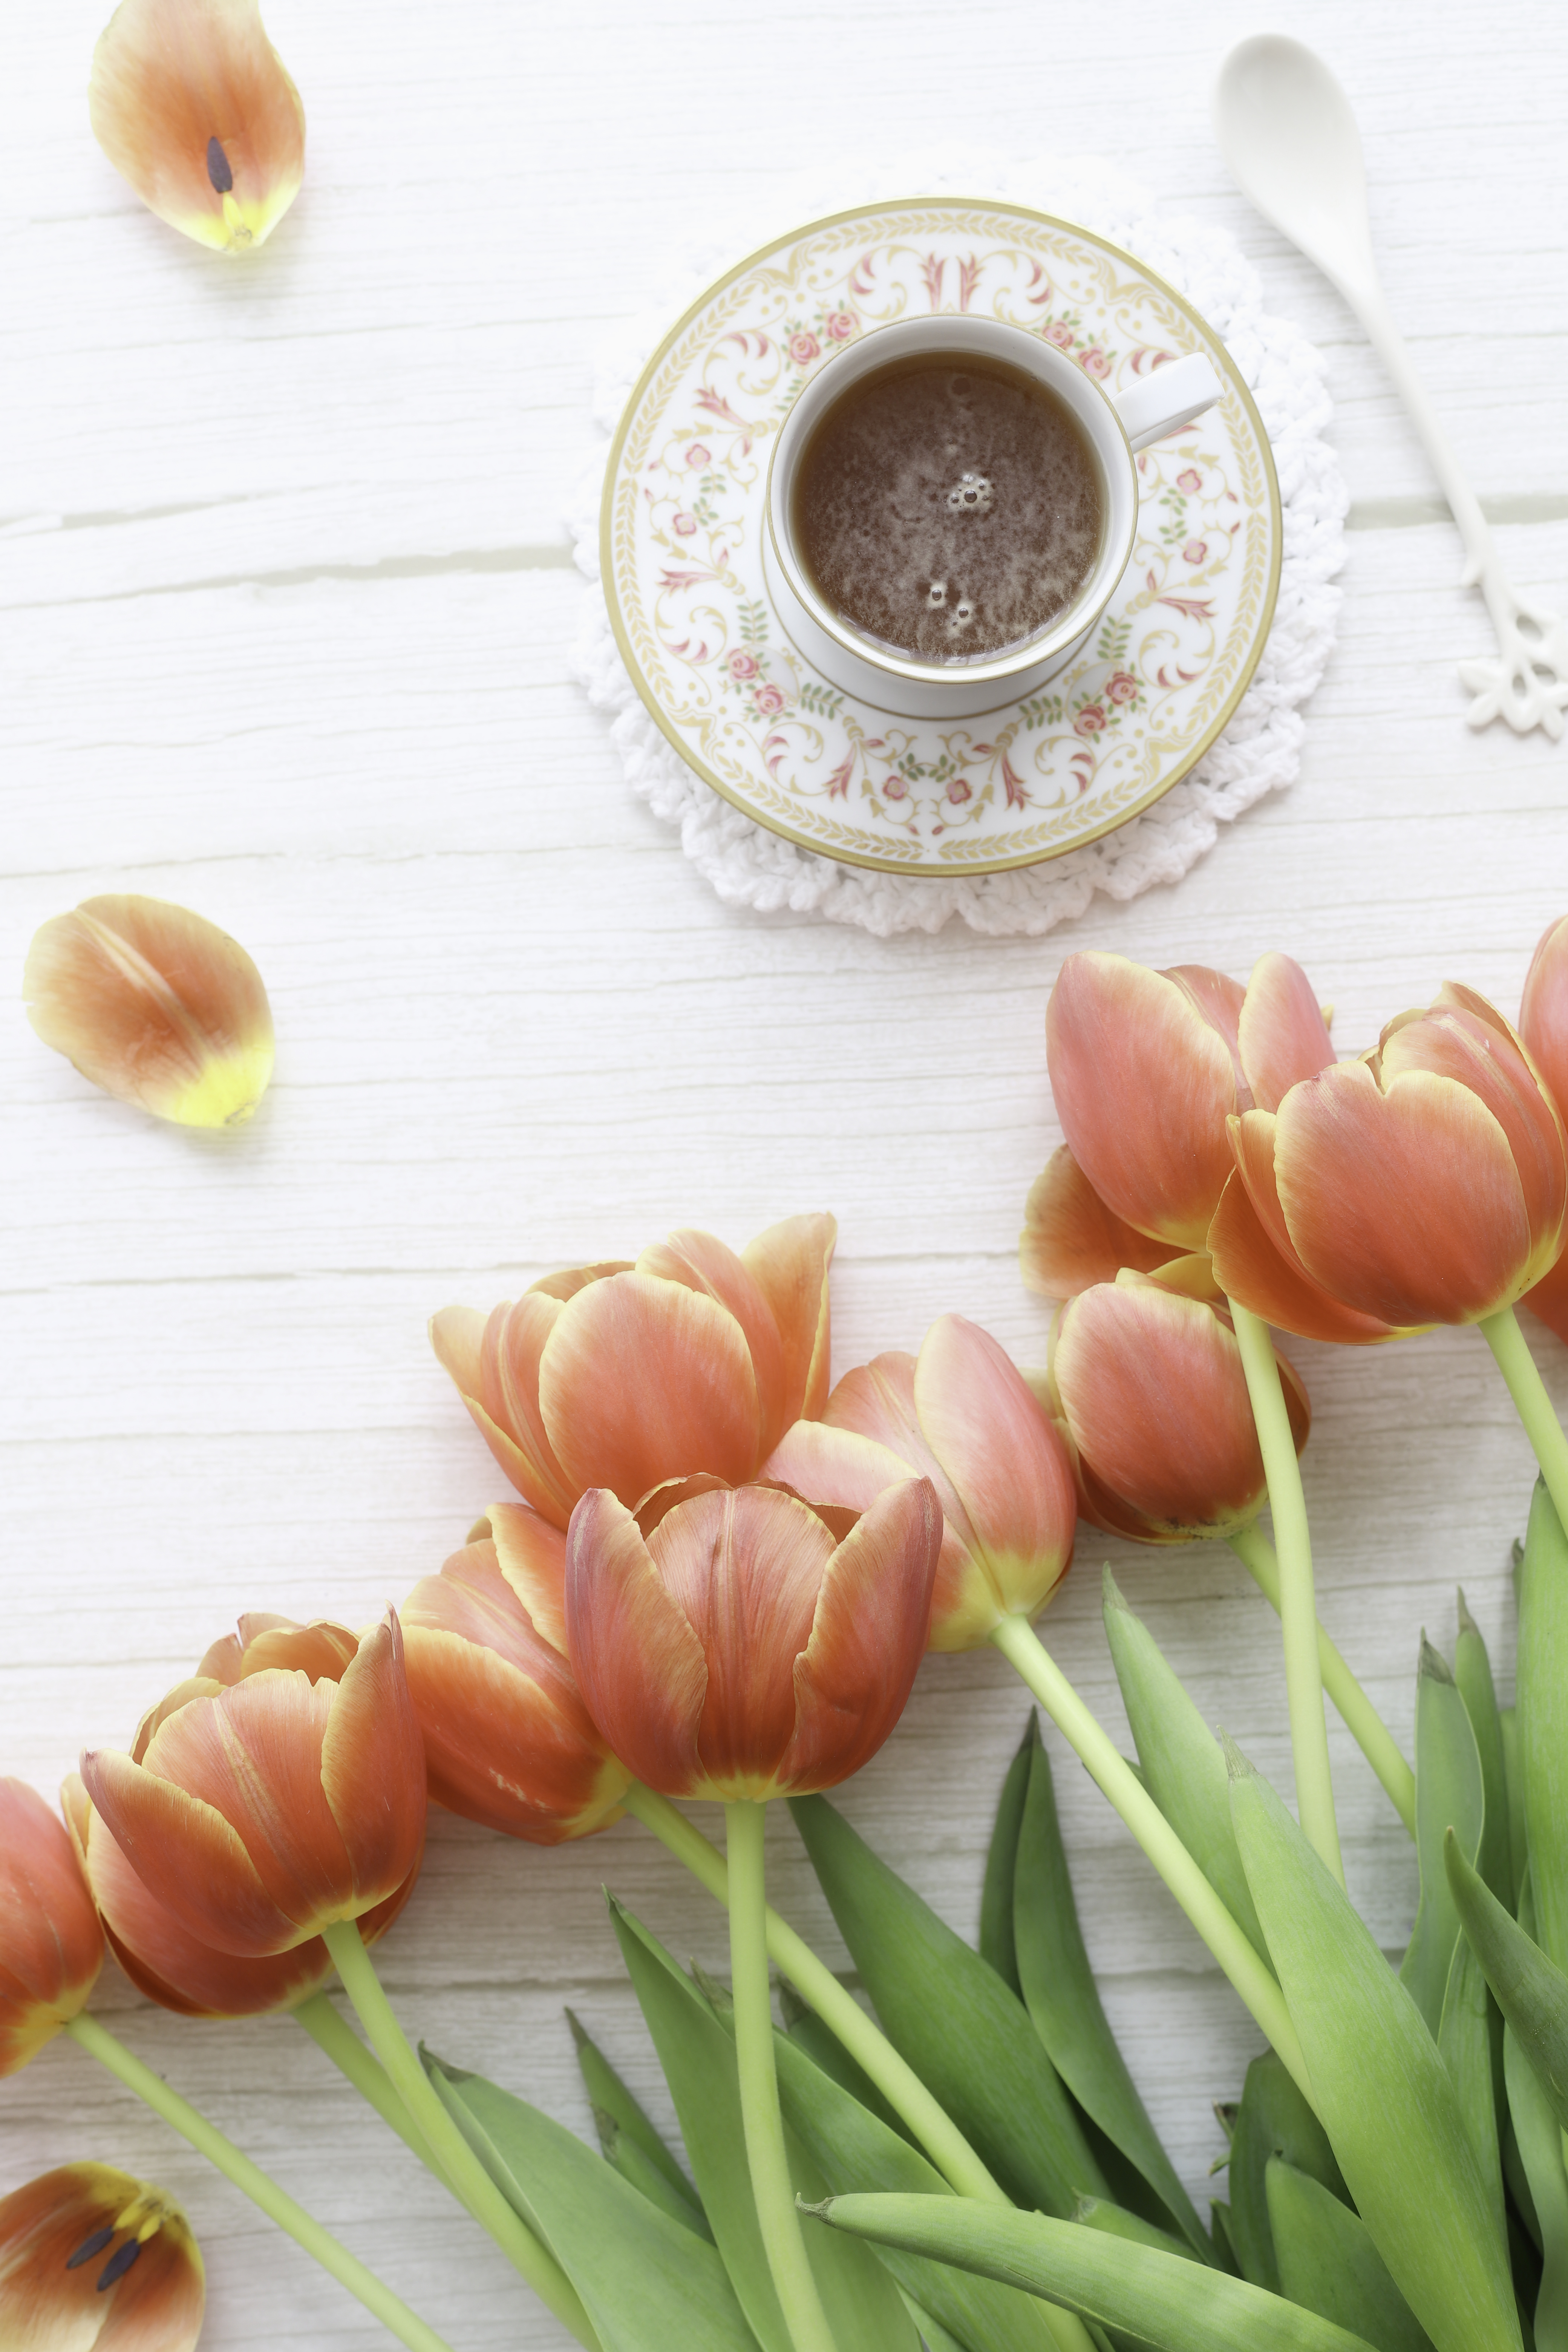 Tea and tulips - delimoon.com